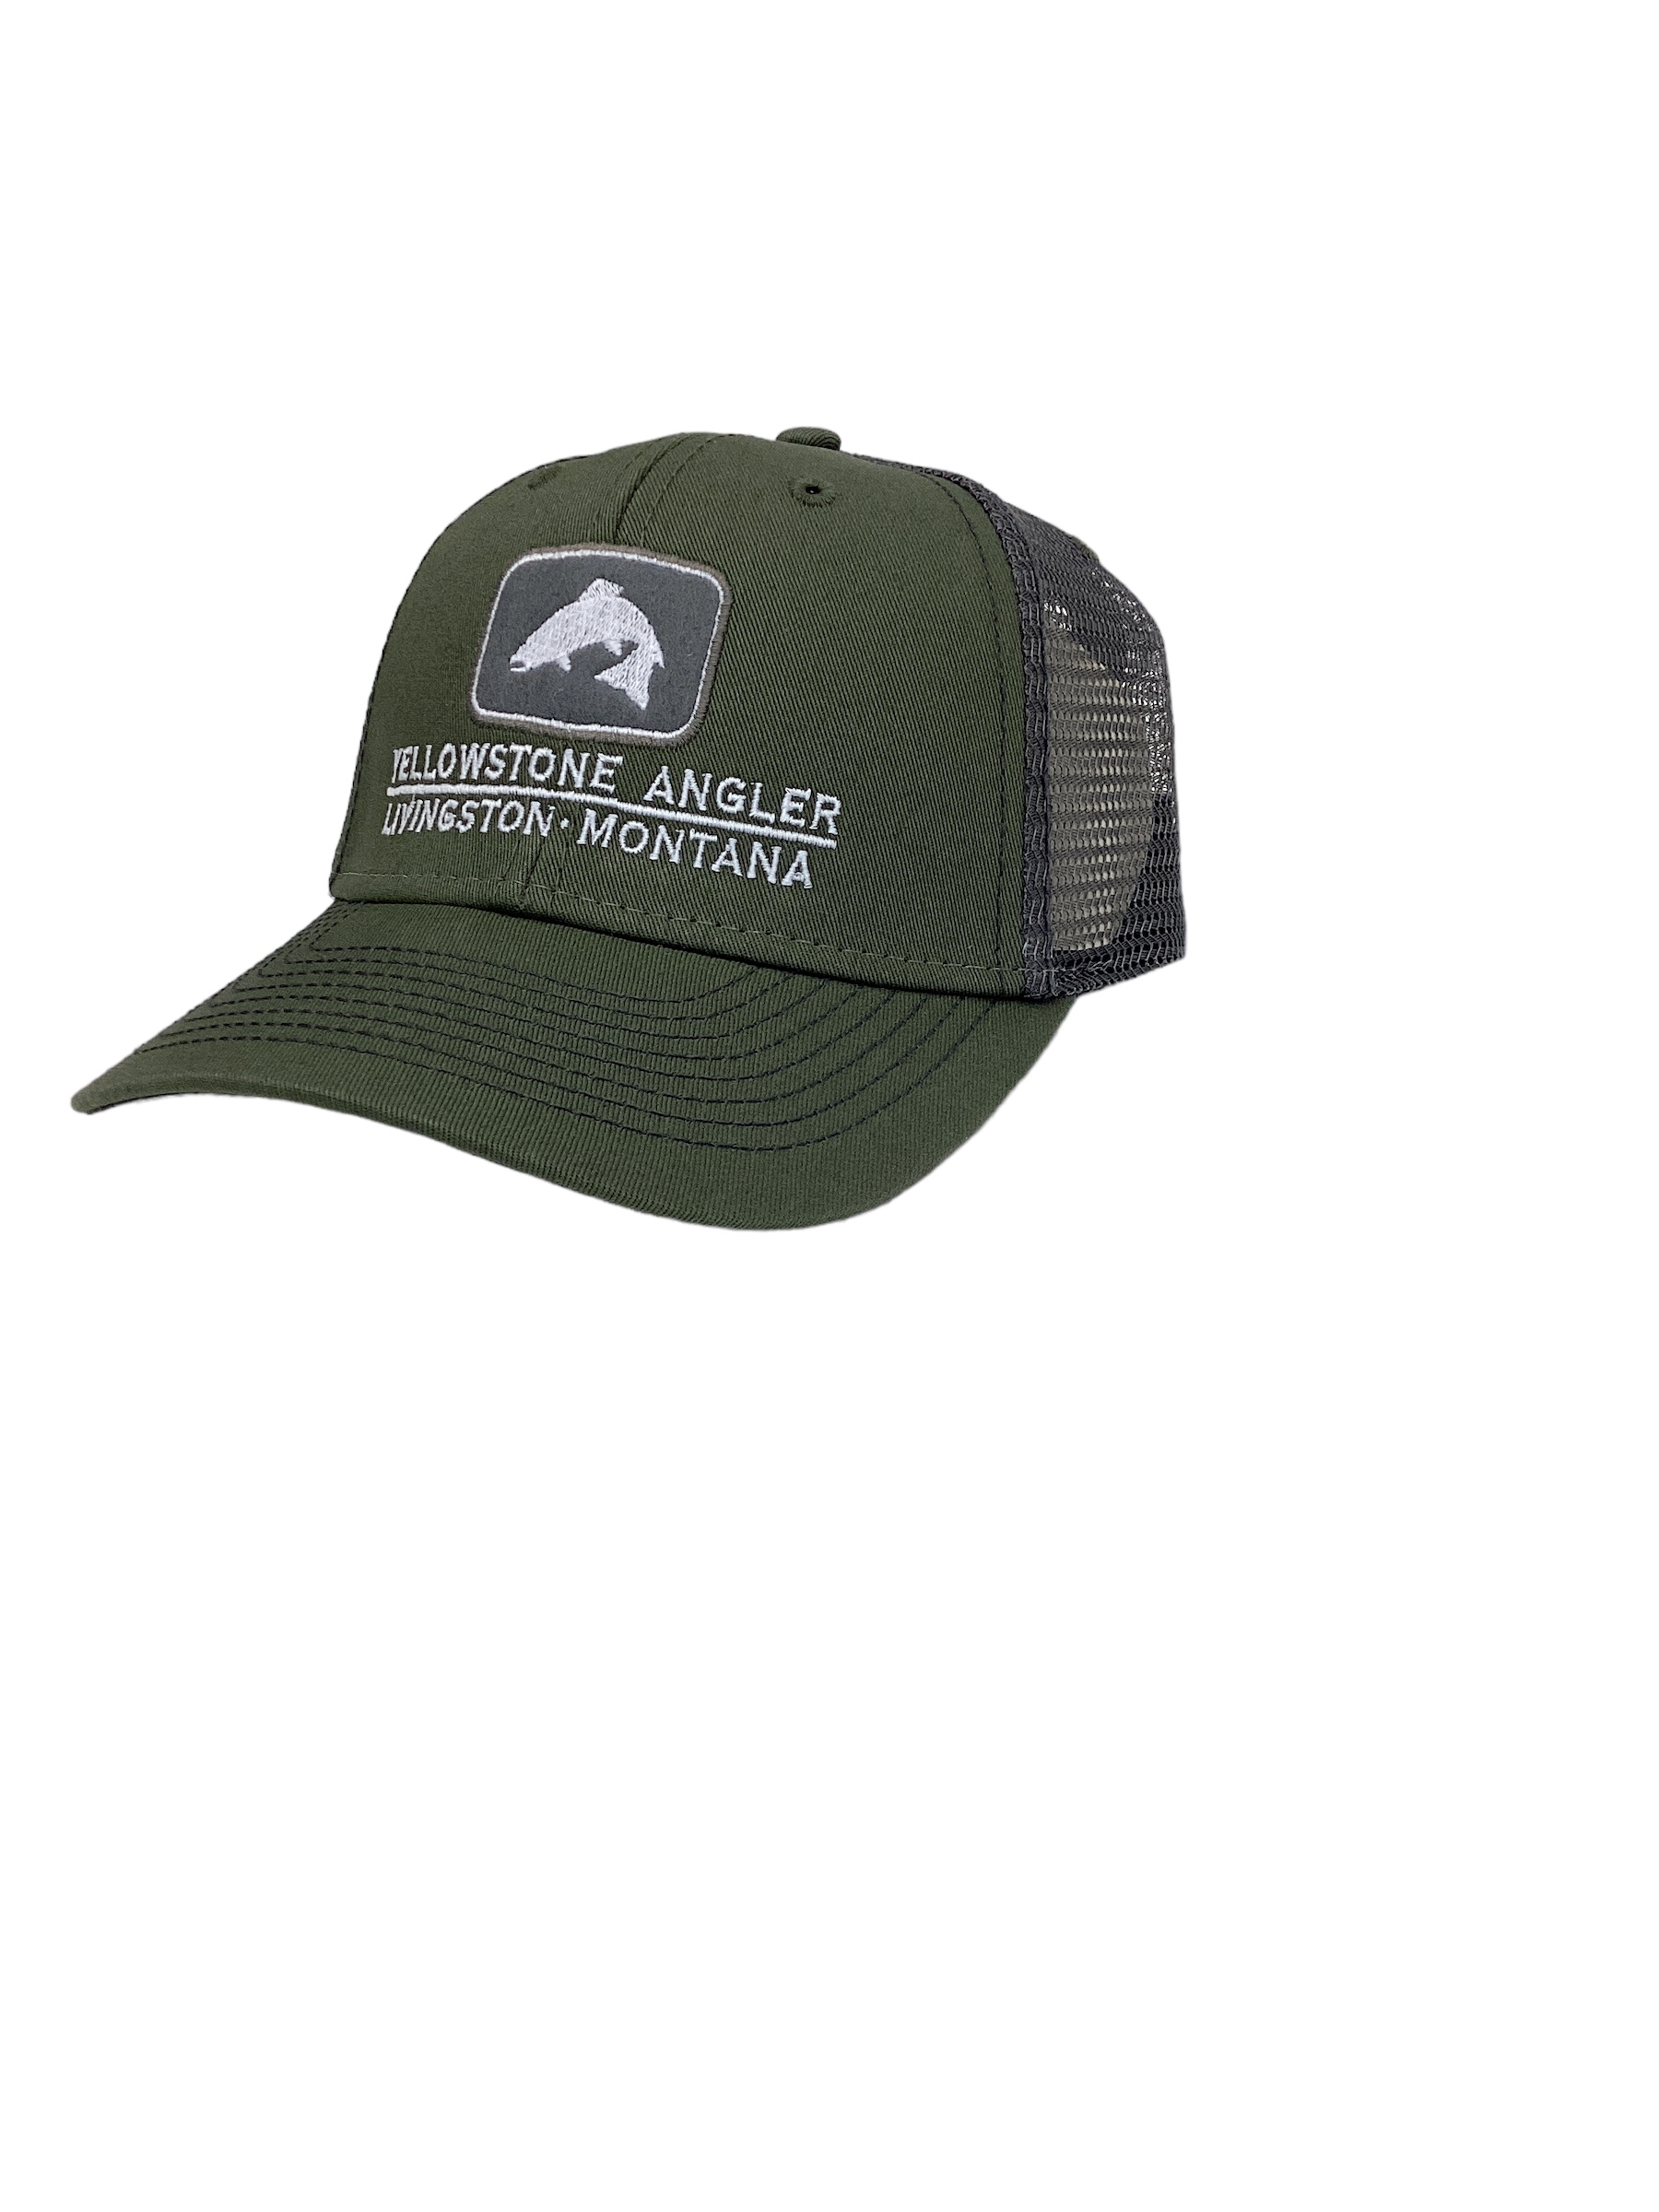 Yellowstone Angler Trout Icon Trucker Hat (Color: Black / Black)